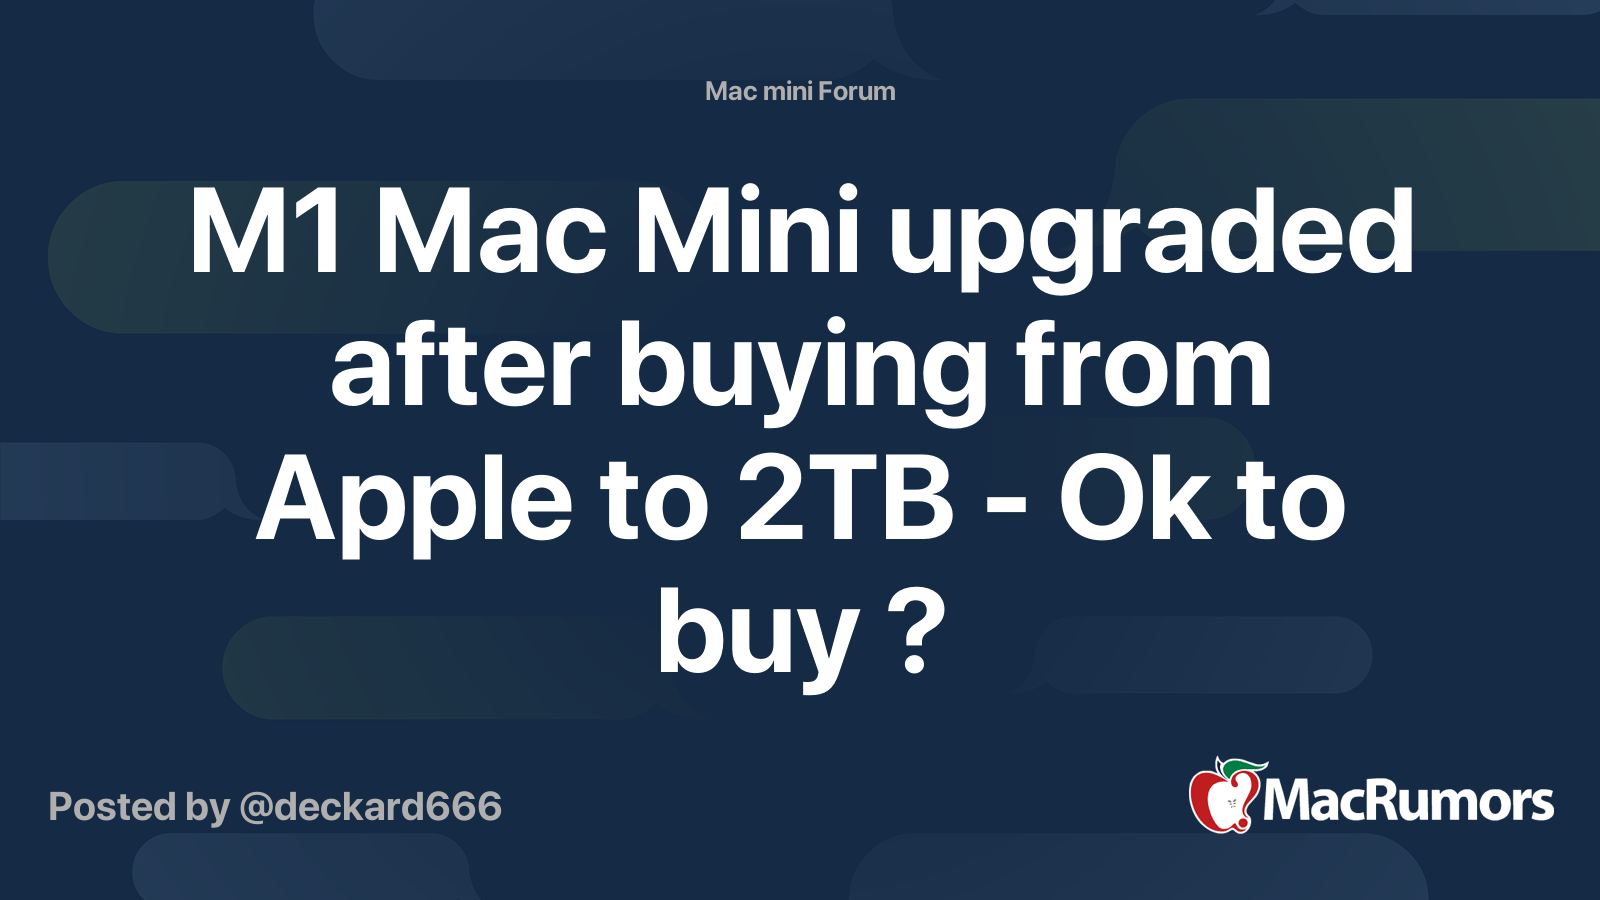 UPGRADING an M1 Mac mini SSD from 256gb to 2TB!! 